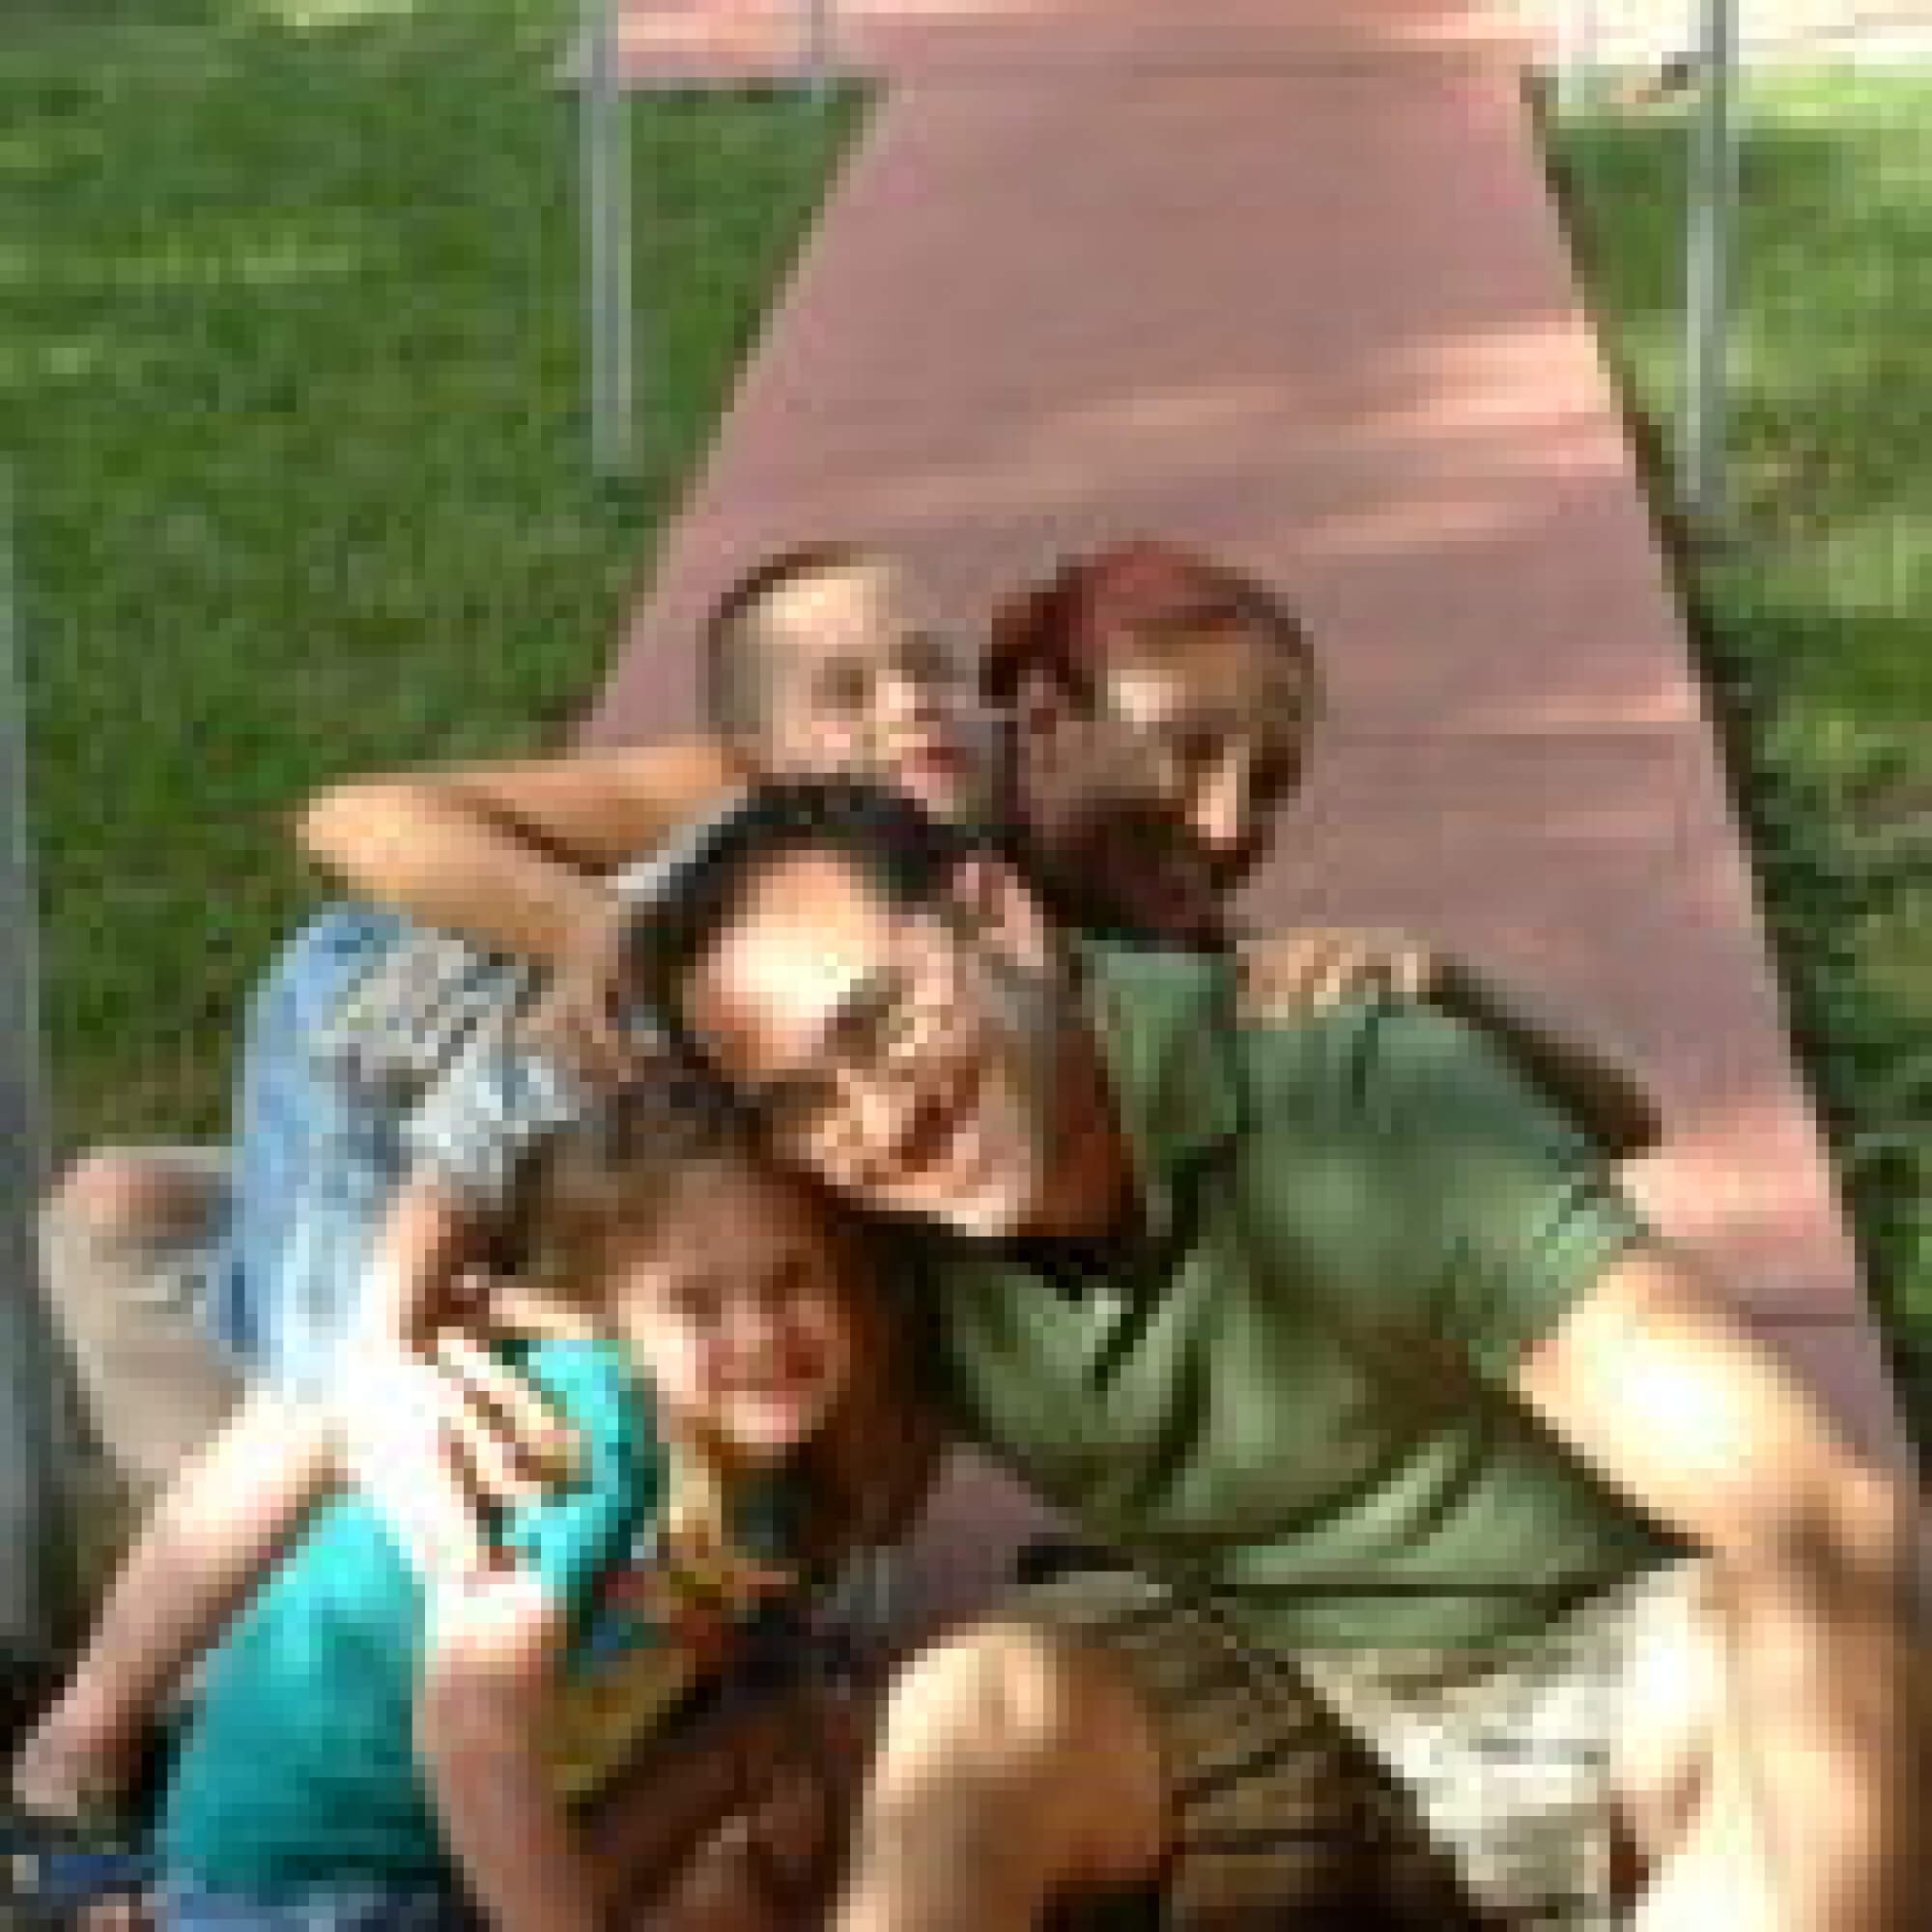 Anthony Perez and family